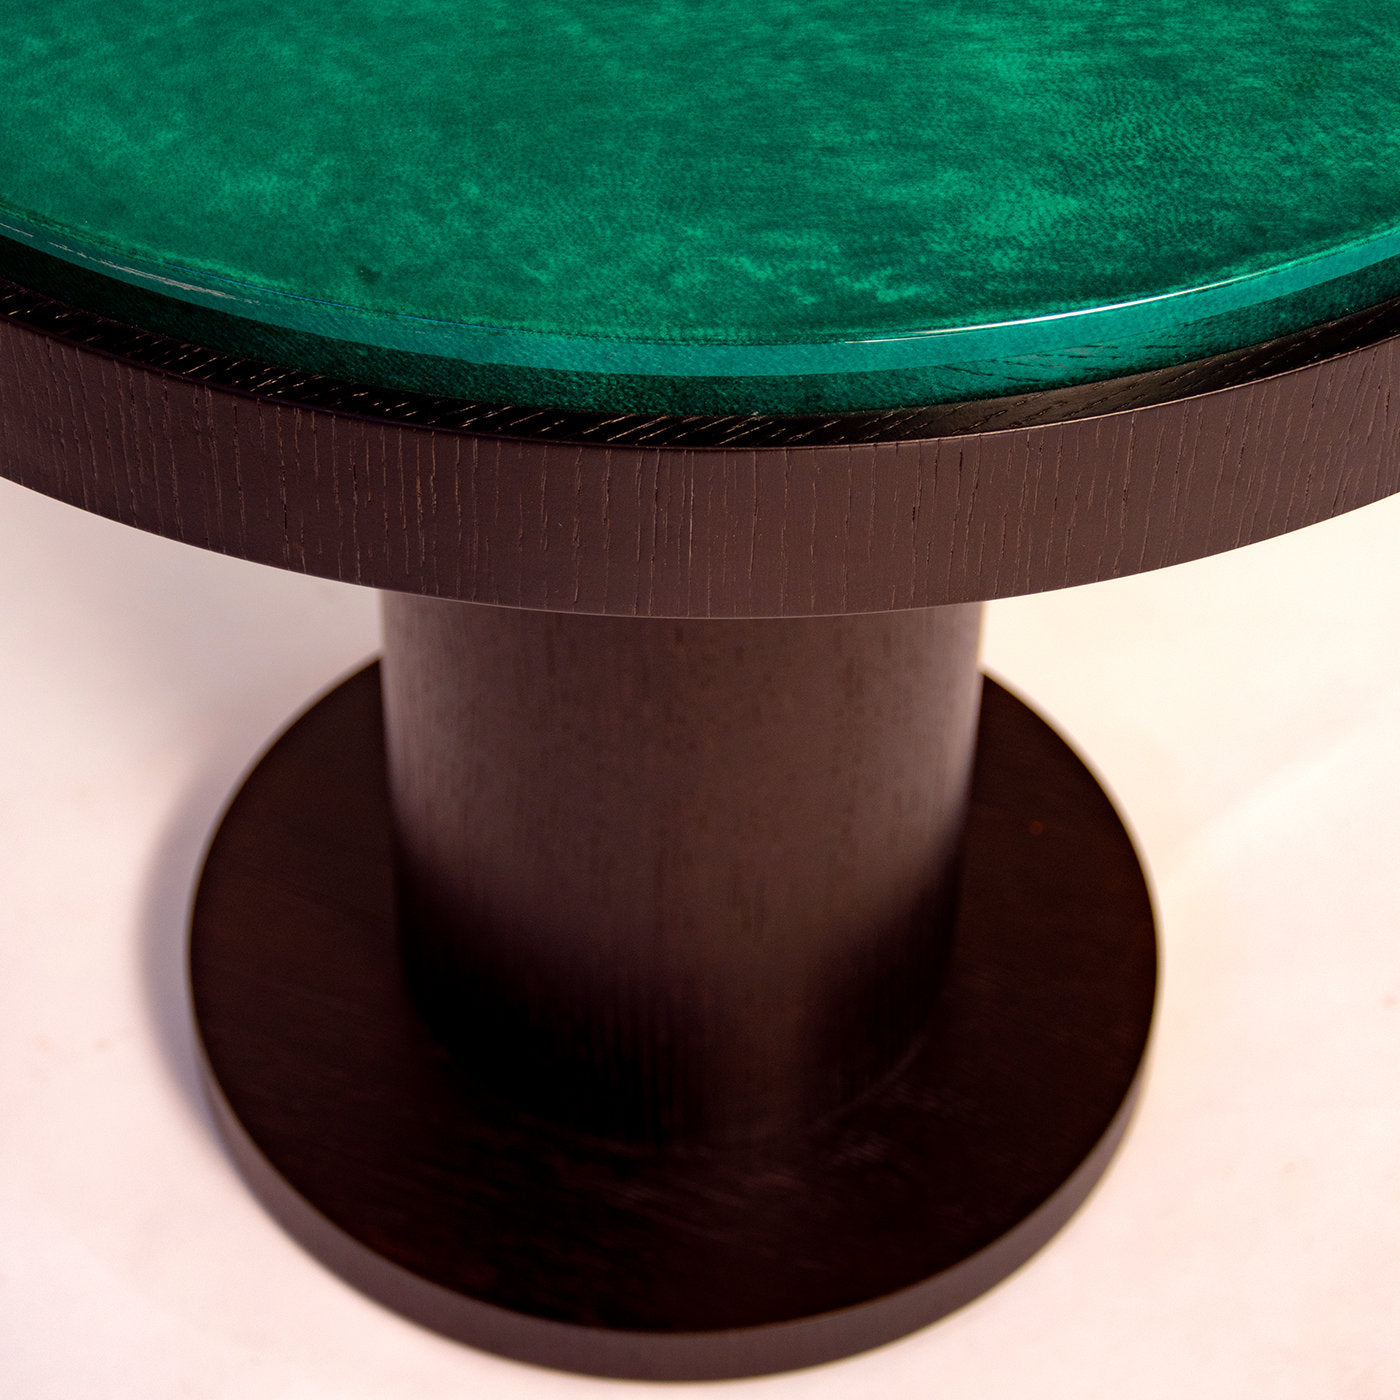 Table d'appoint zen verte - Vue alternative 1